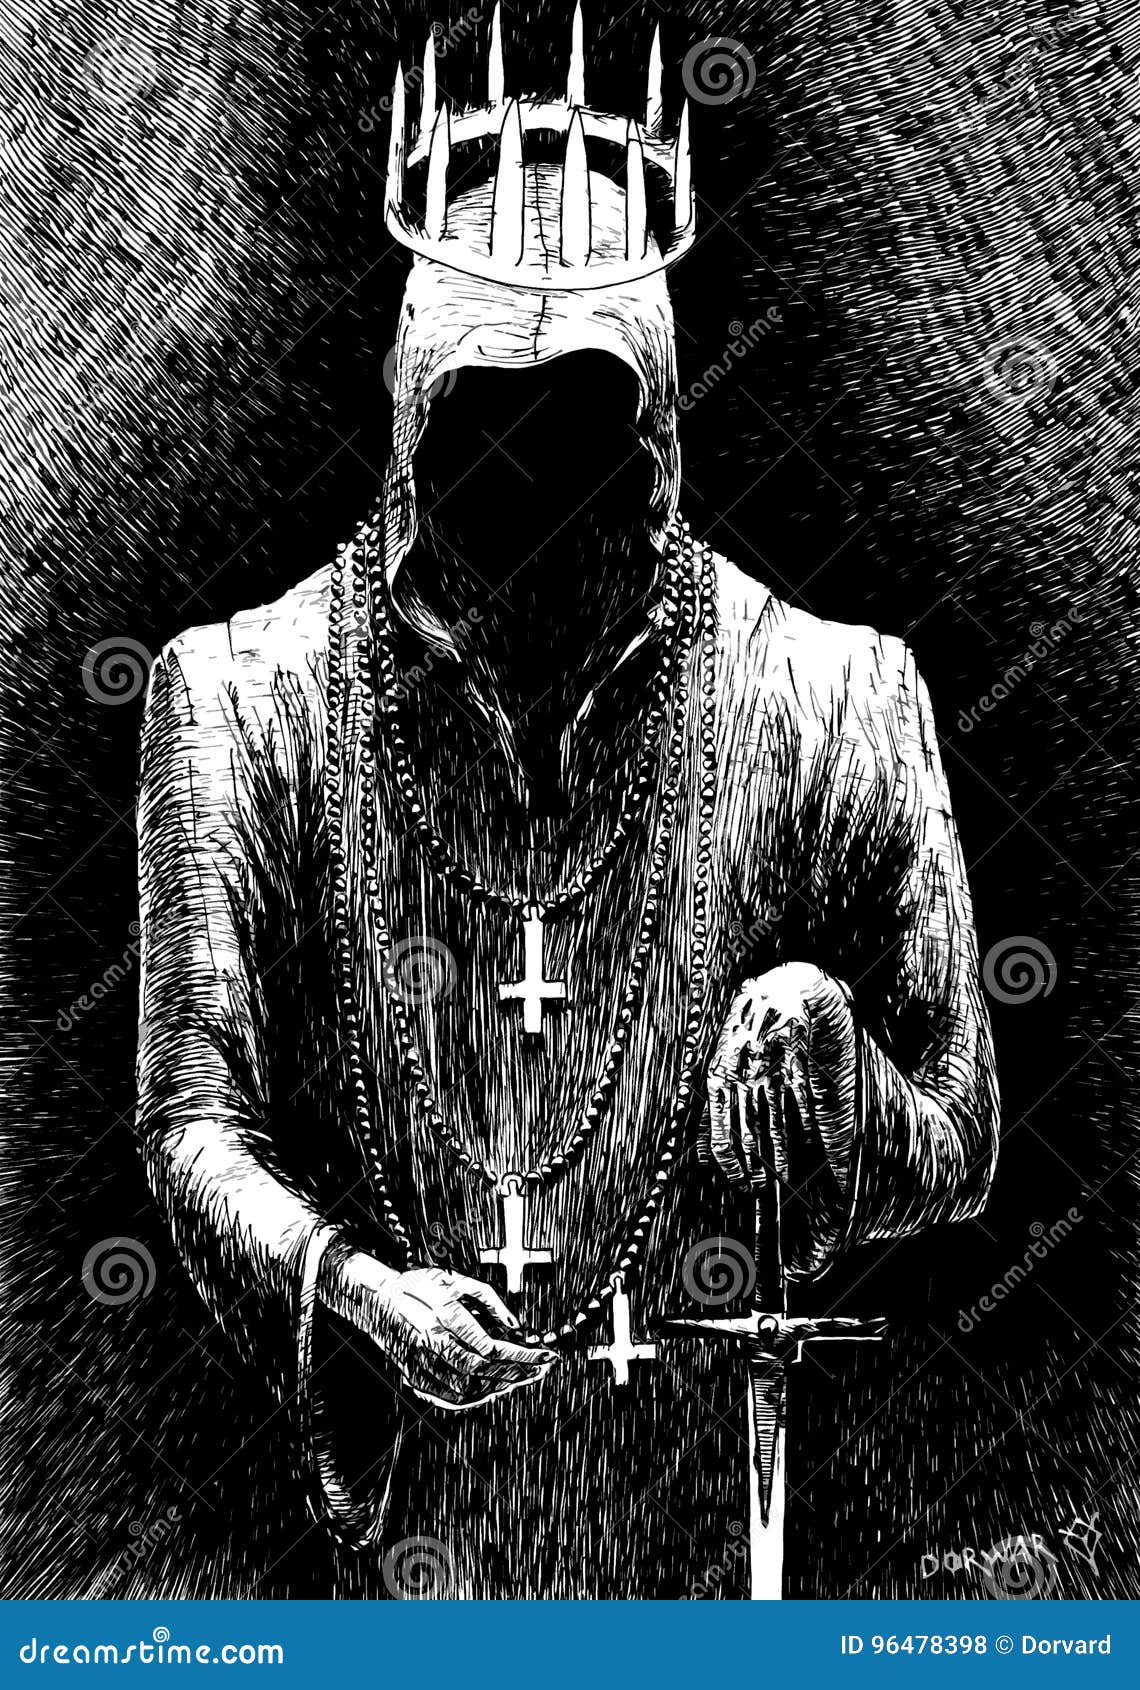 pope nameless shadow in hood